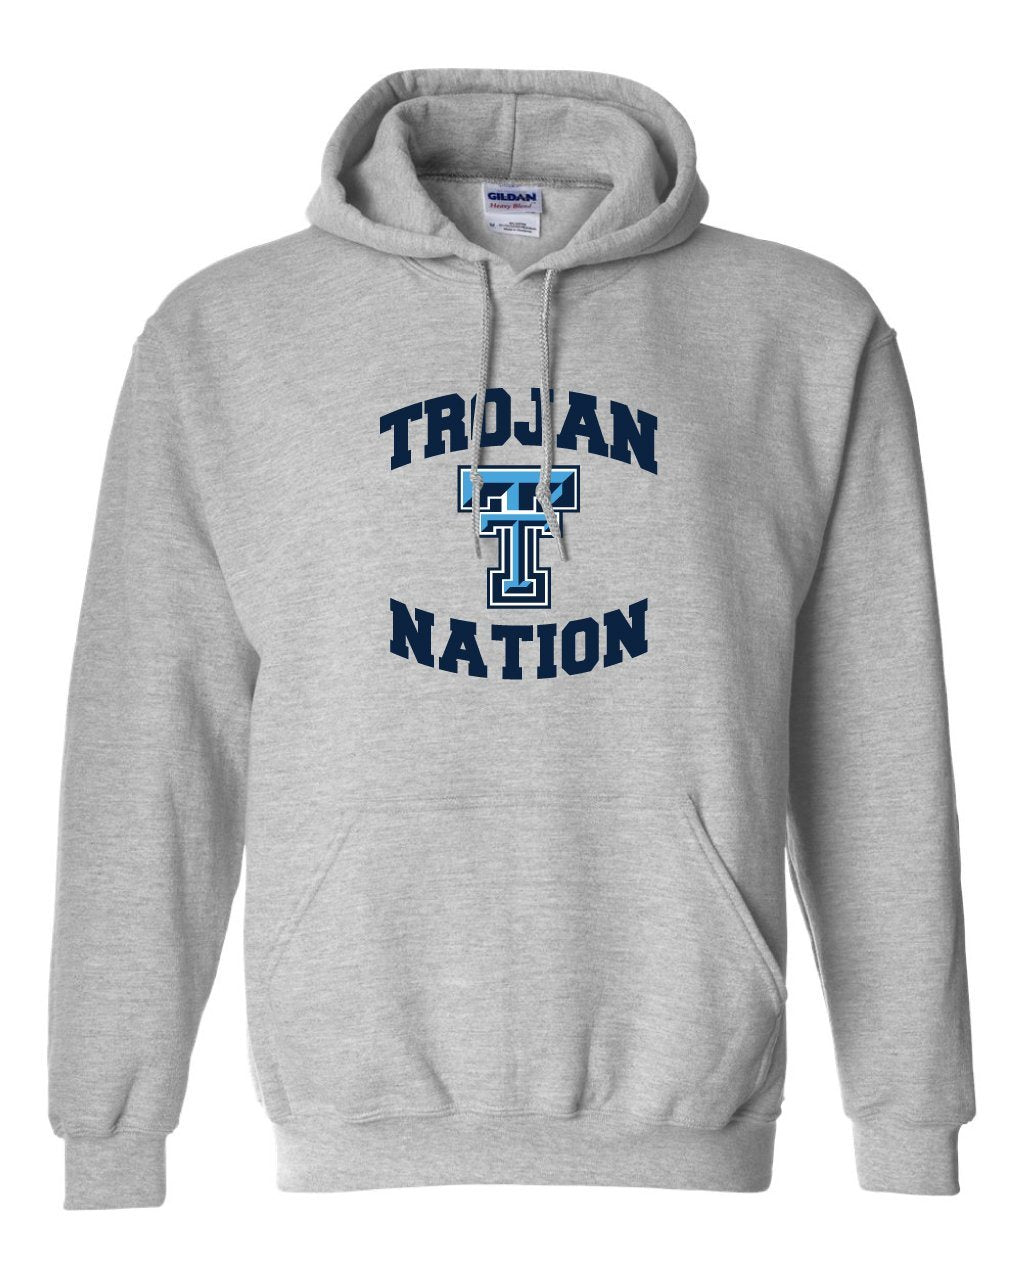 Triopia Trojans - Trojan Nation Hooded Sweatshirt